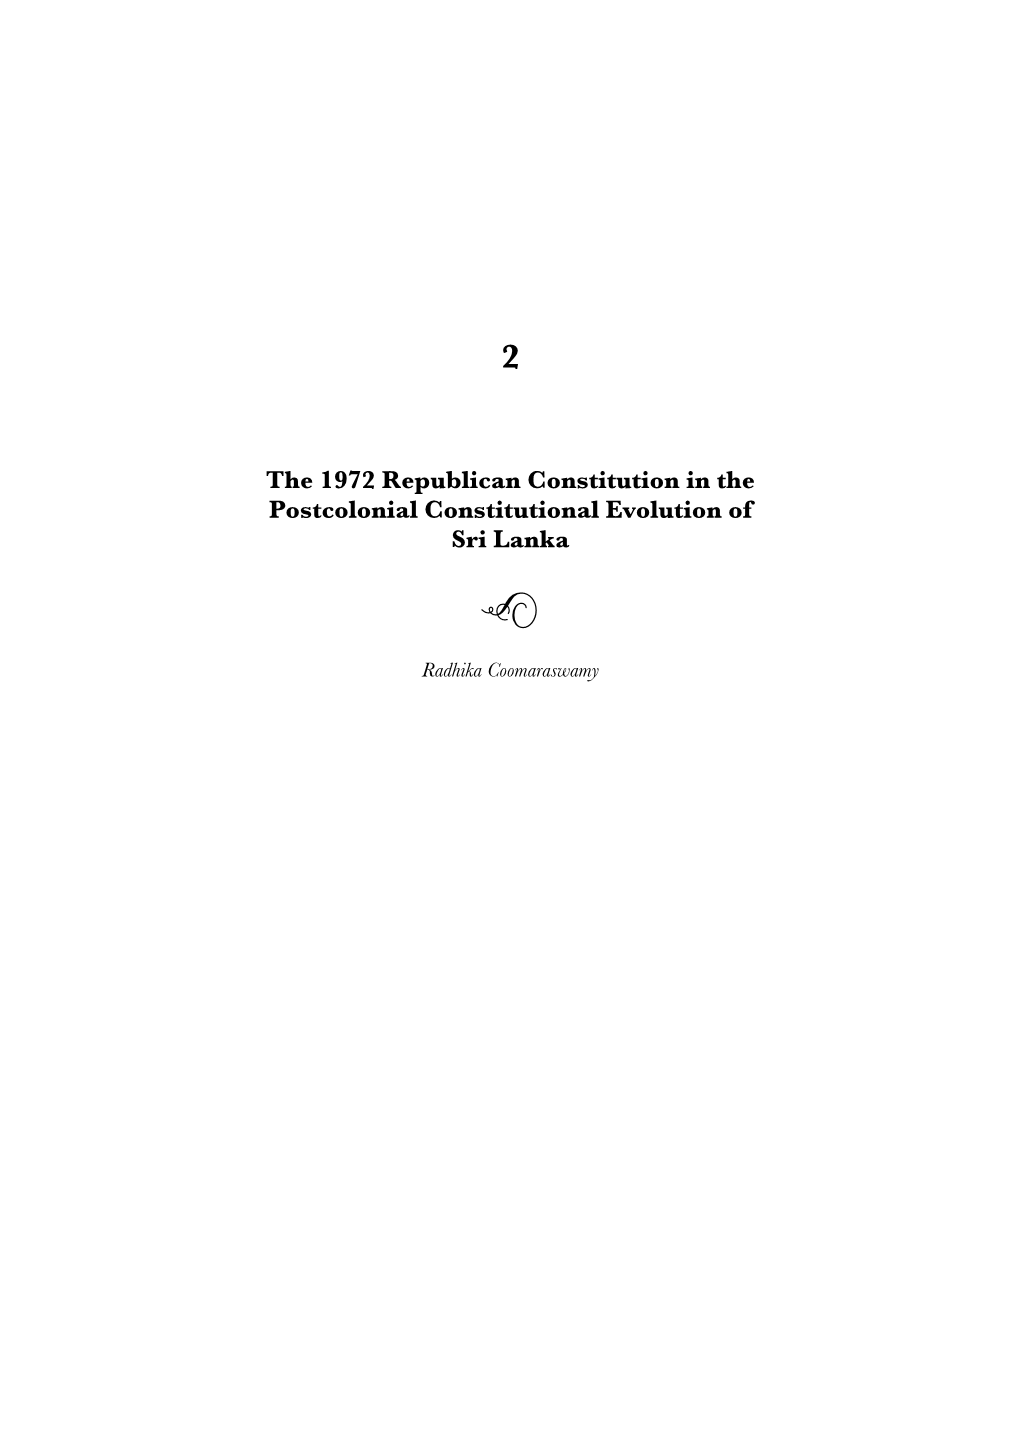 The 1972 Republican Constitution of Sri Lanka in The